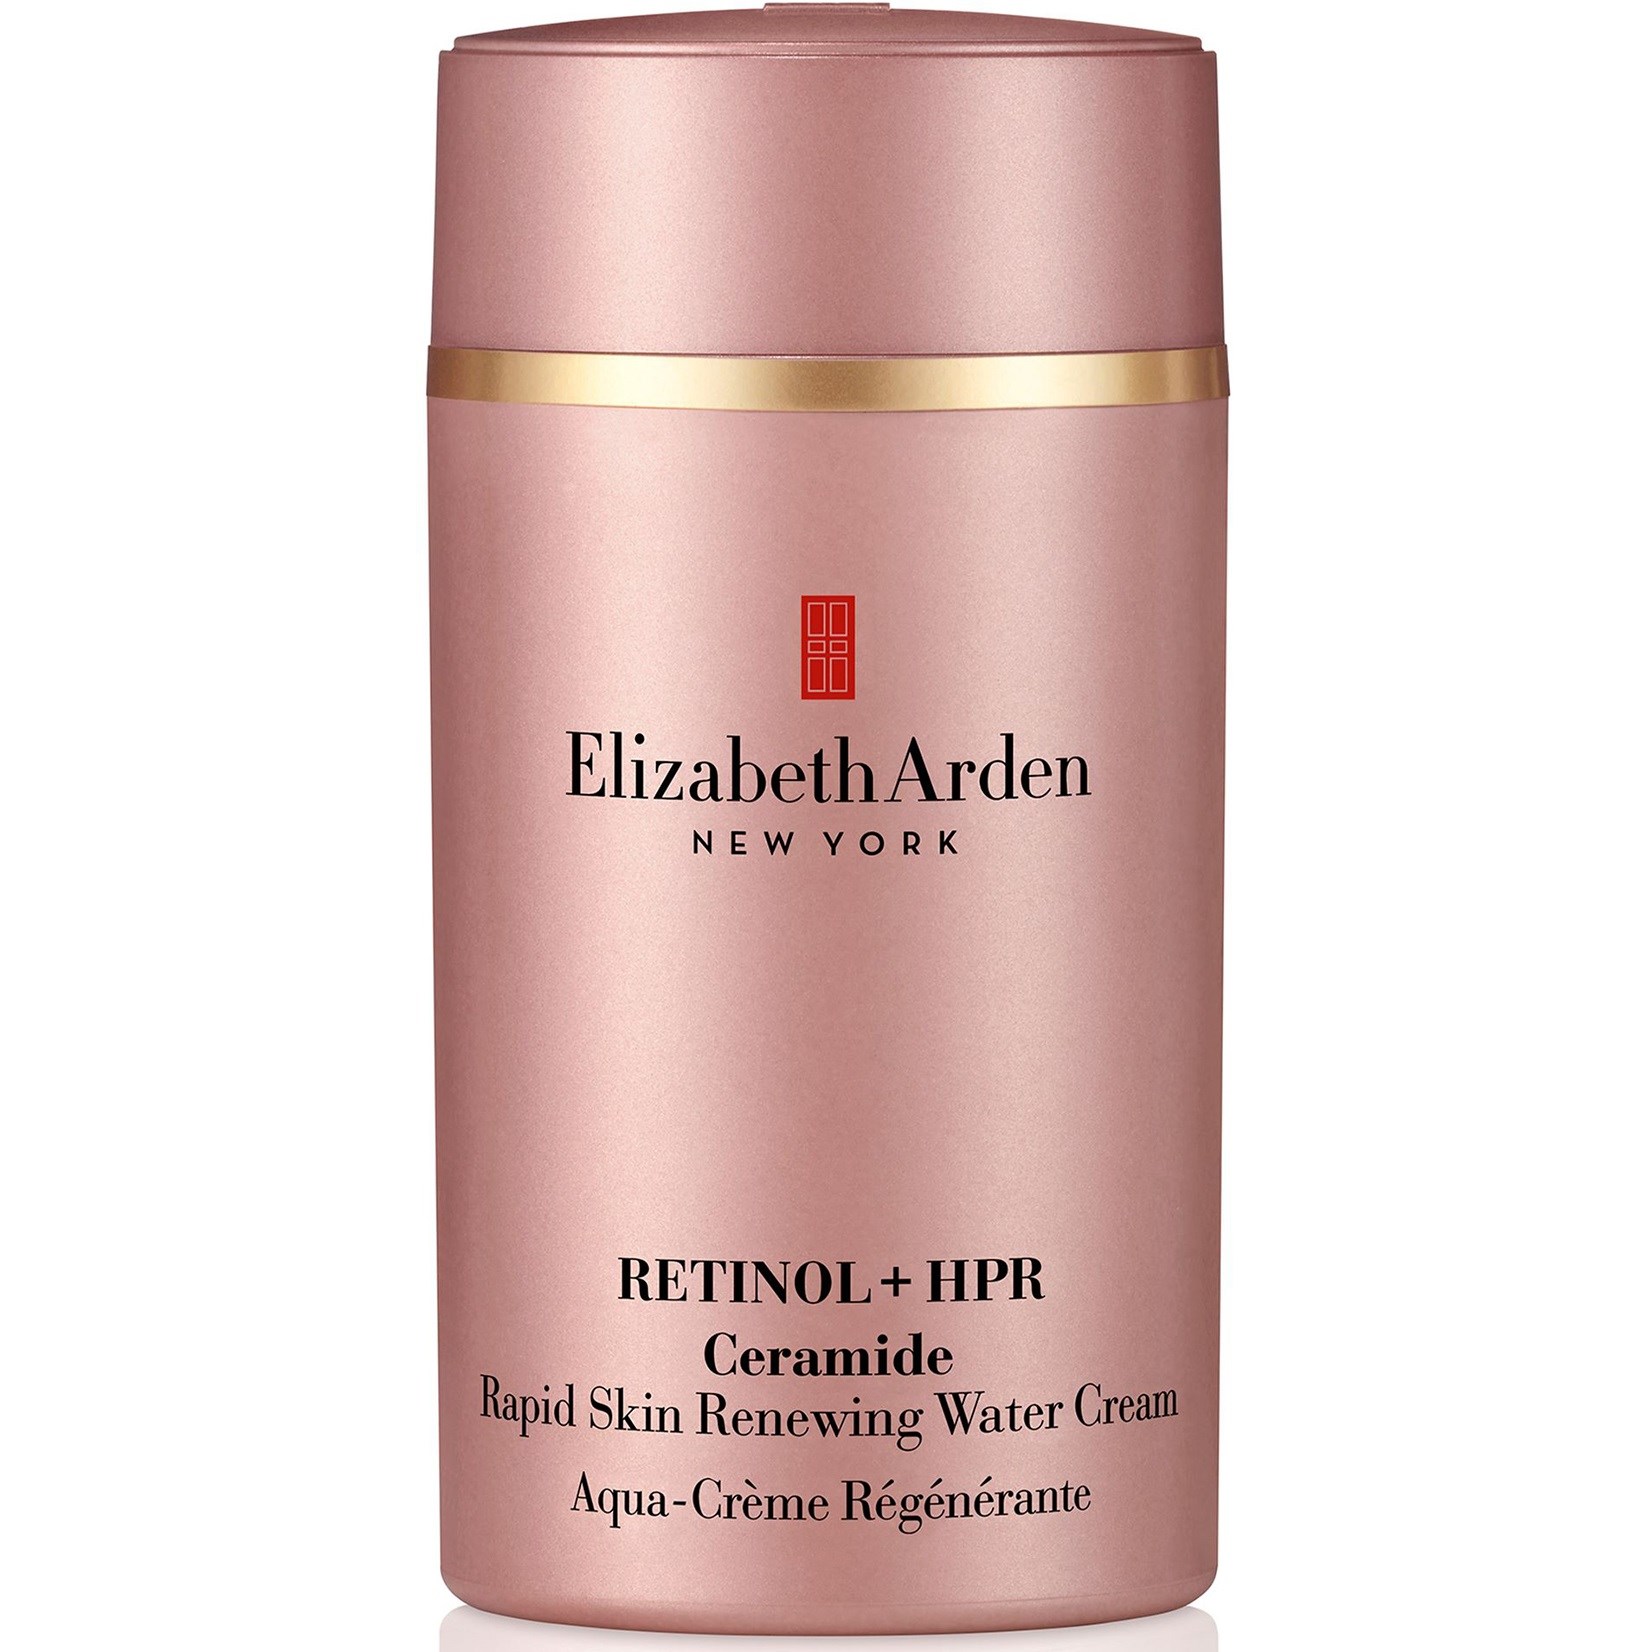 Elizabeth Arden Ceramide Ceramide Retinol HPR Water Cream 50 ml